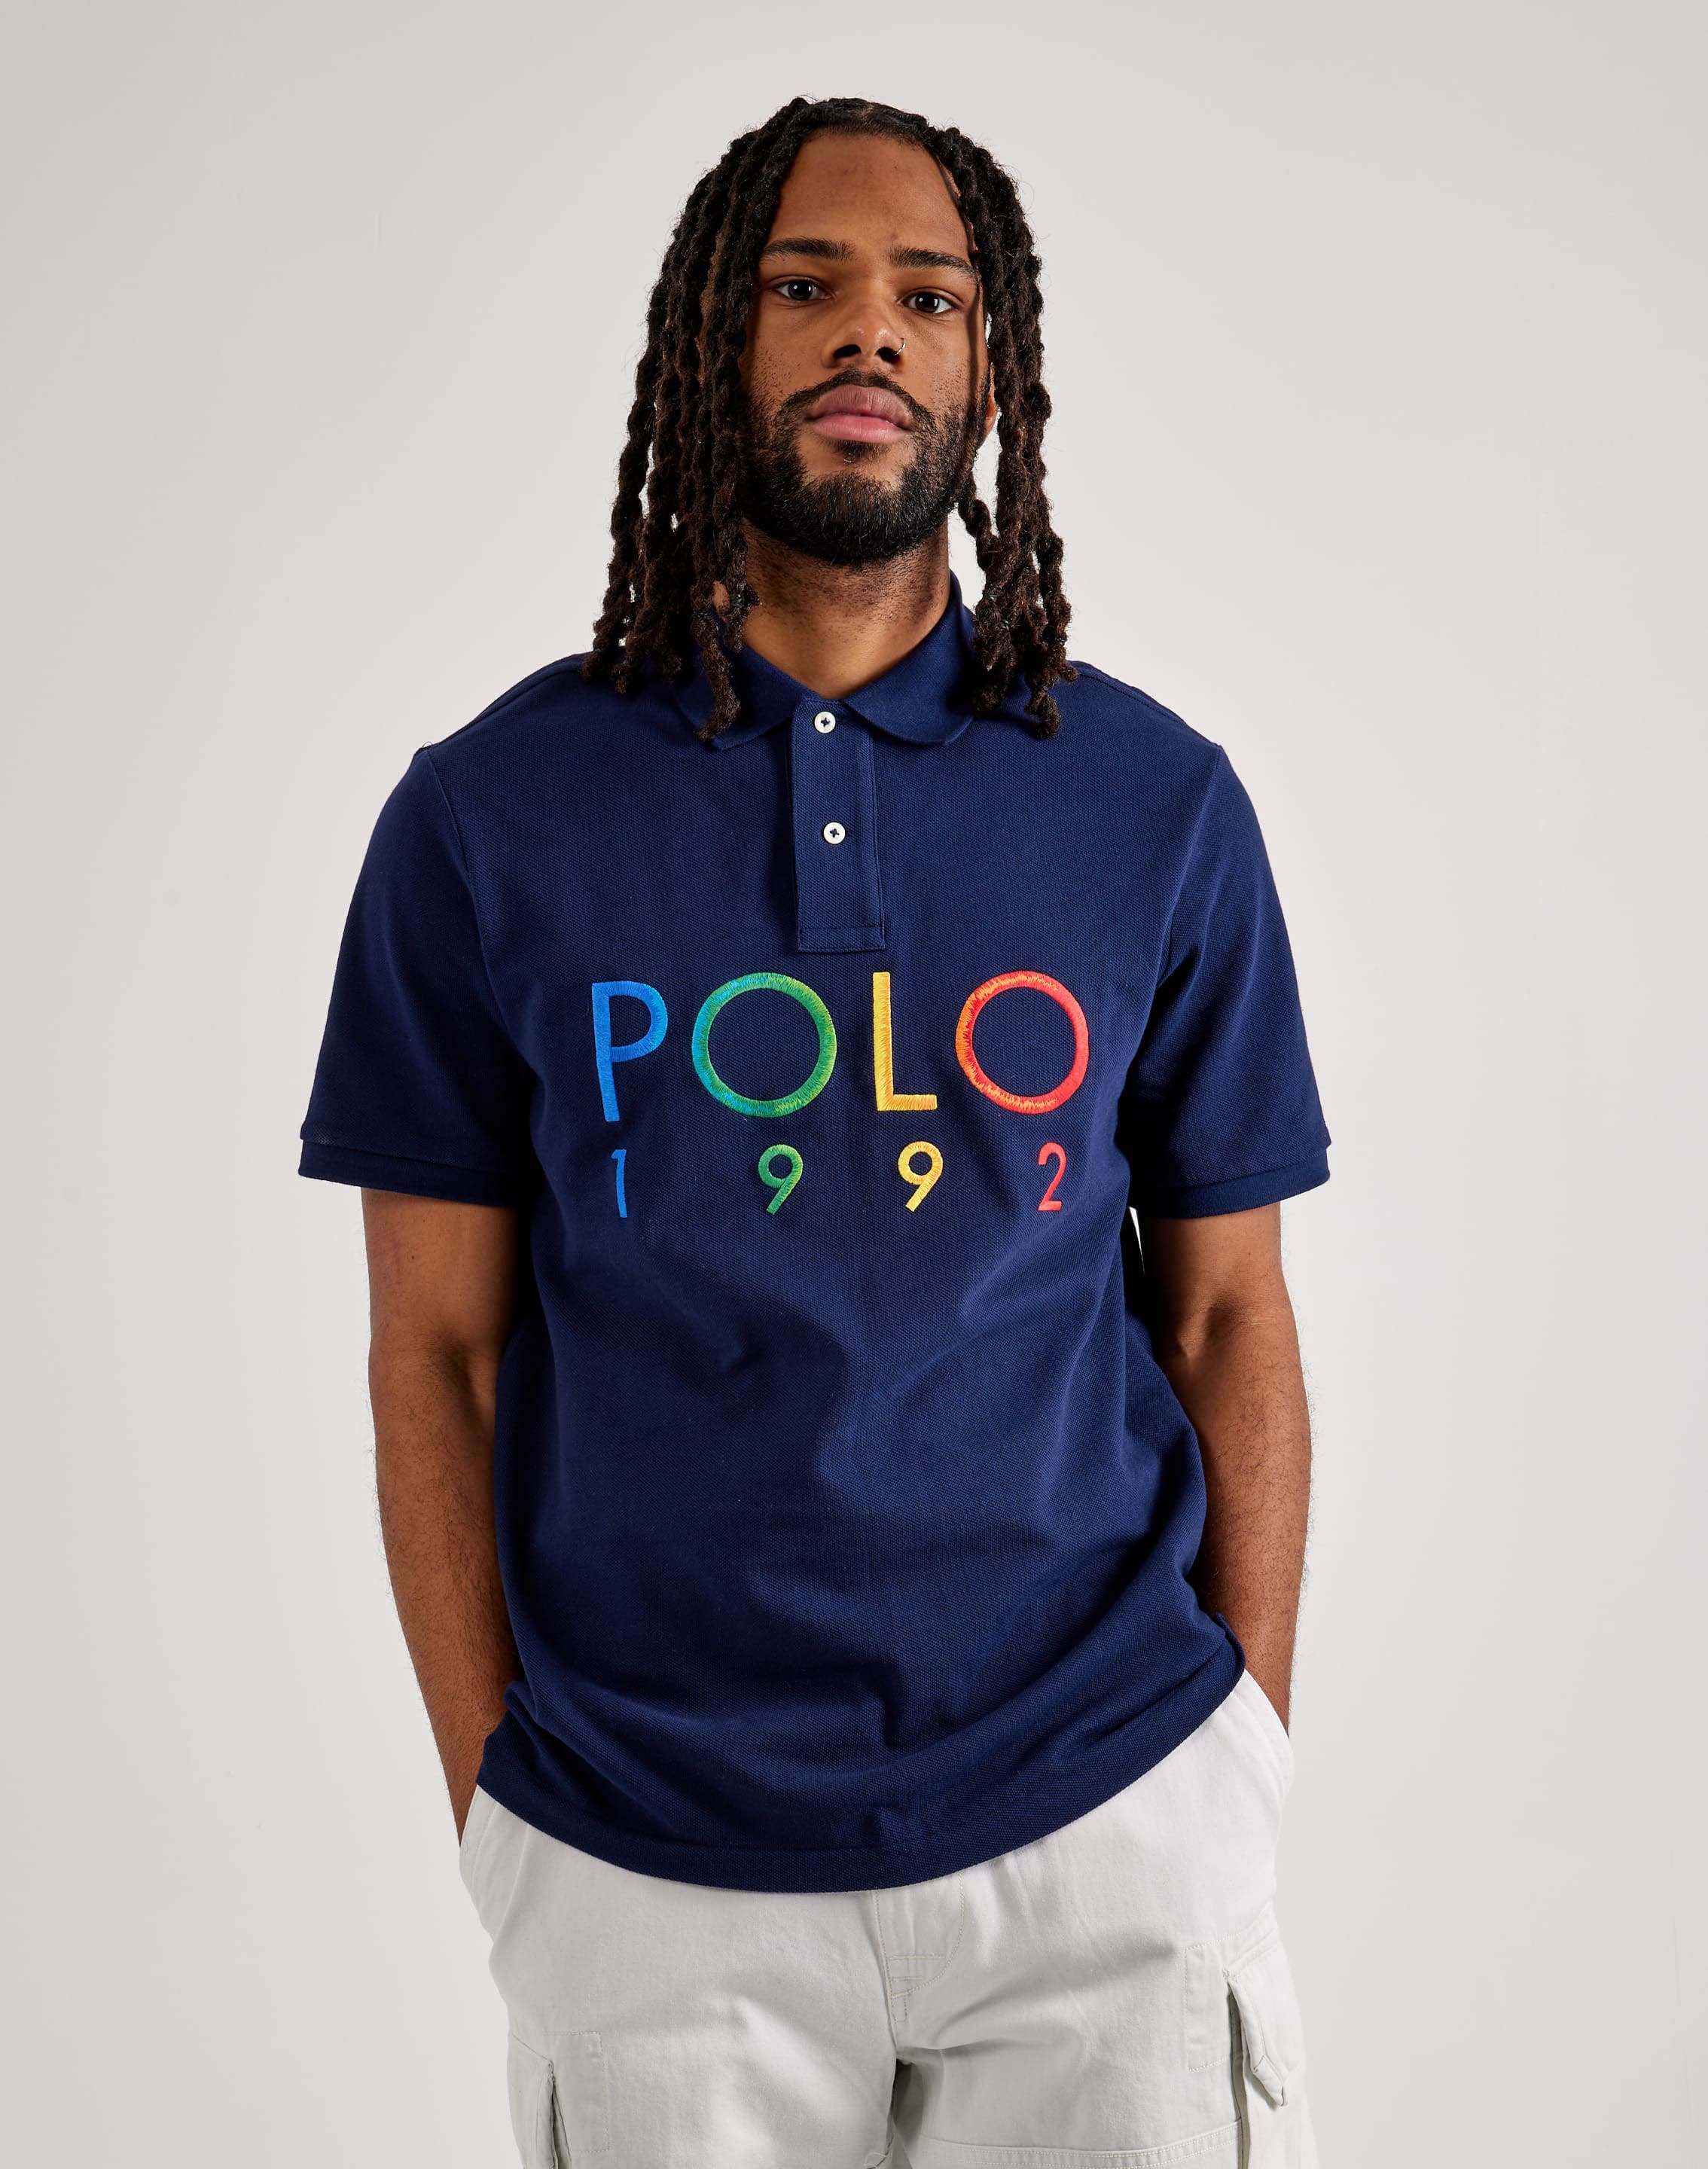 Polo Ralph Lauren 1992 Mesh Polo Shirt